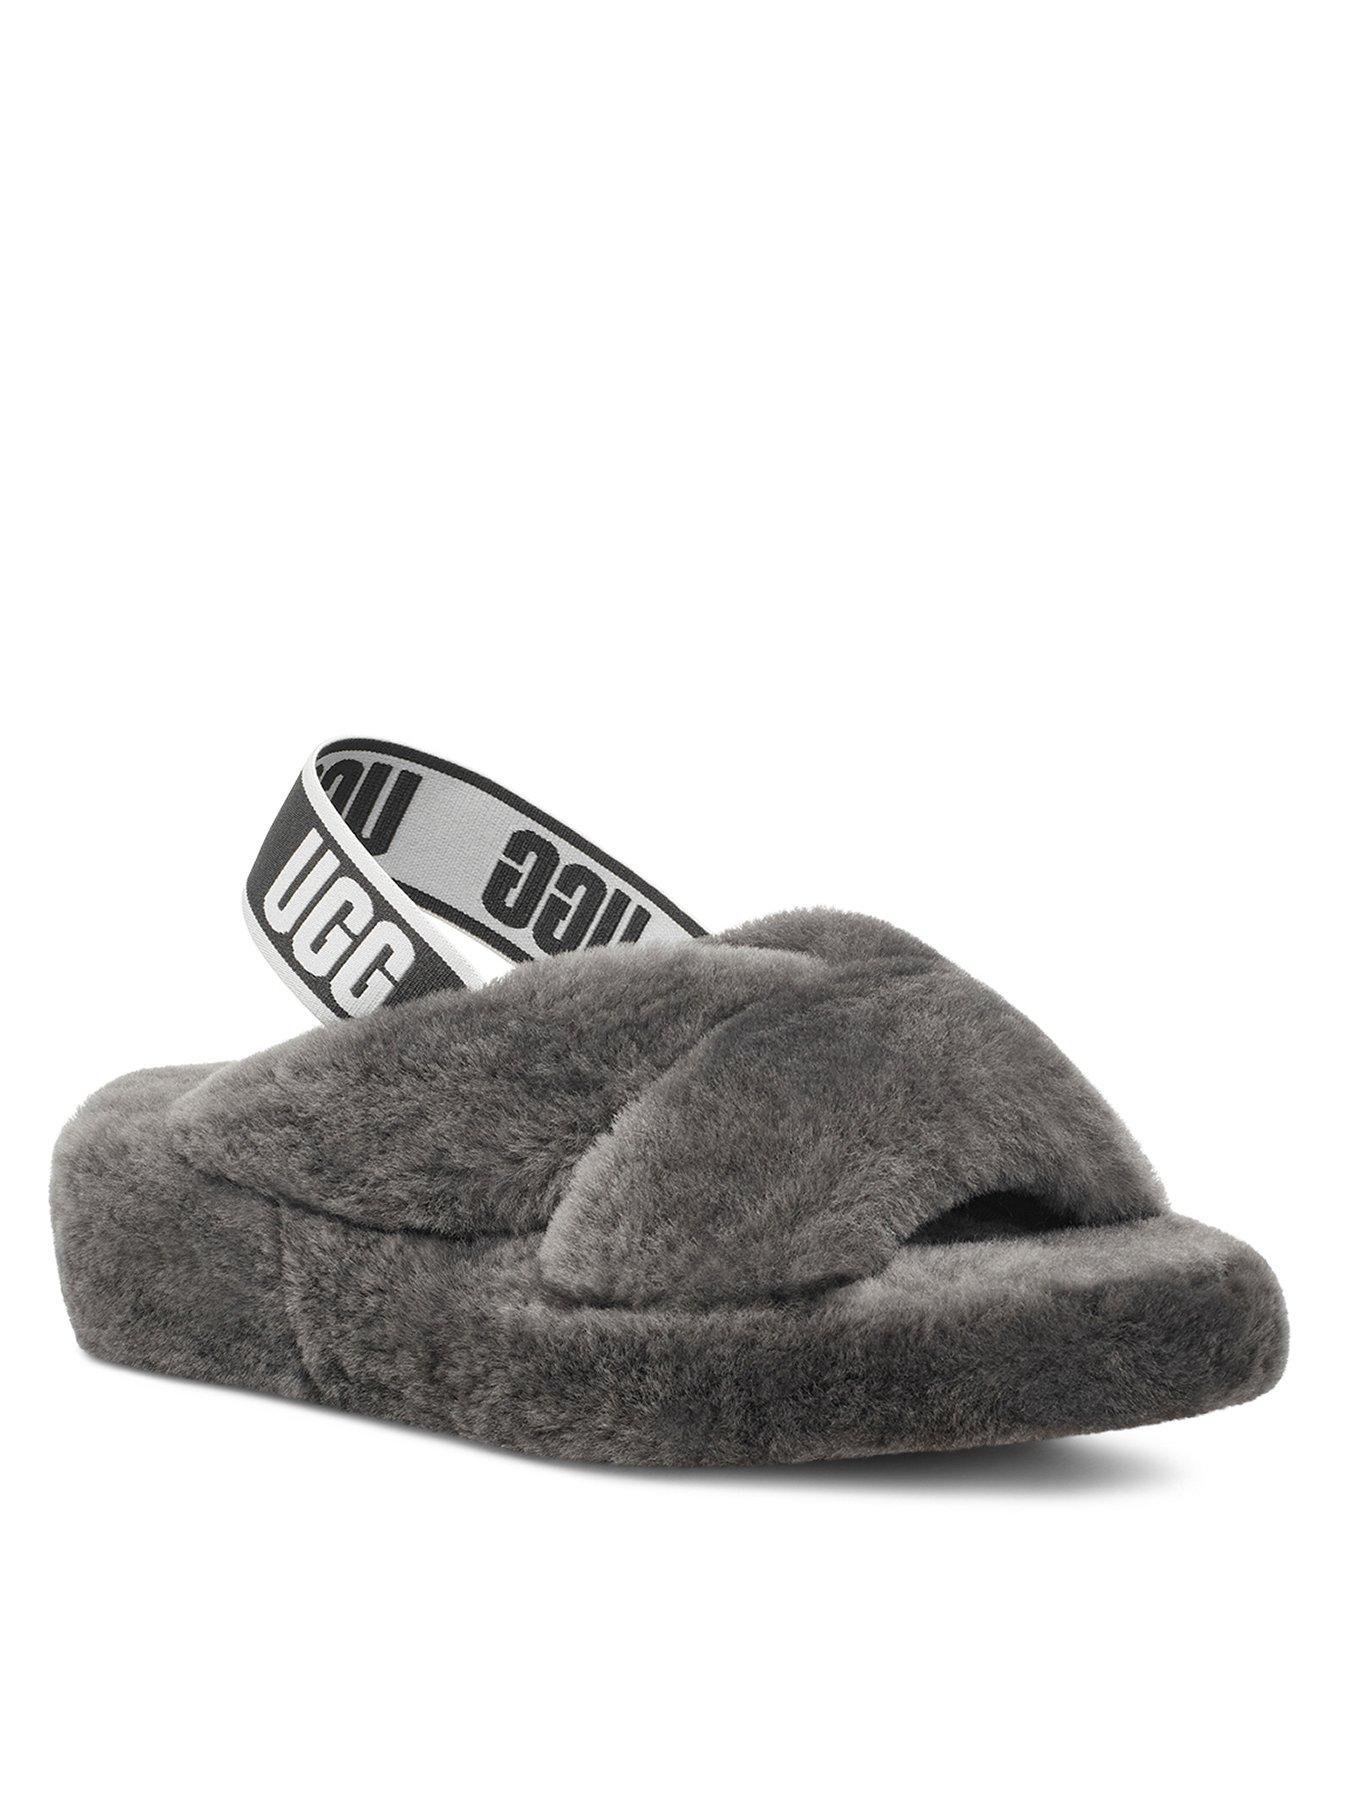 grey ugg slippers uk